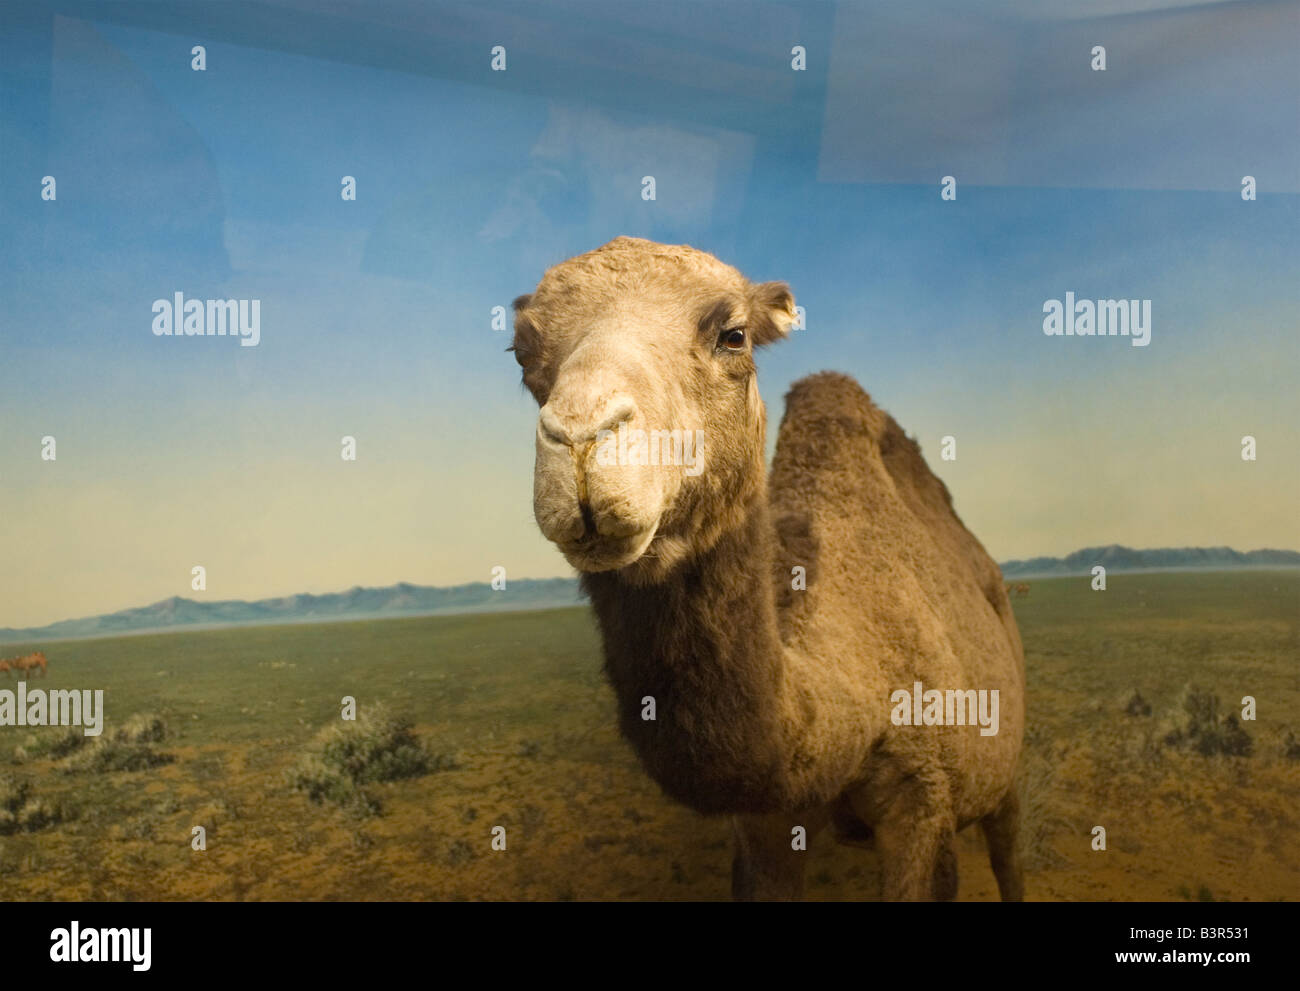 Dromedary One Hump Camel displayed at the Natural History Museum Milan Italy Stock Photo